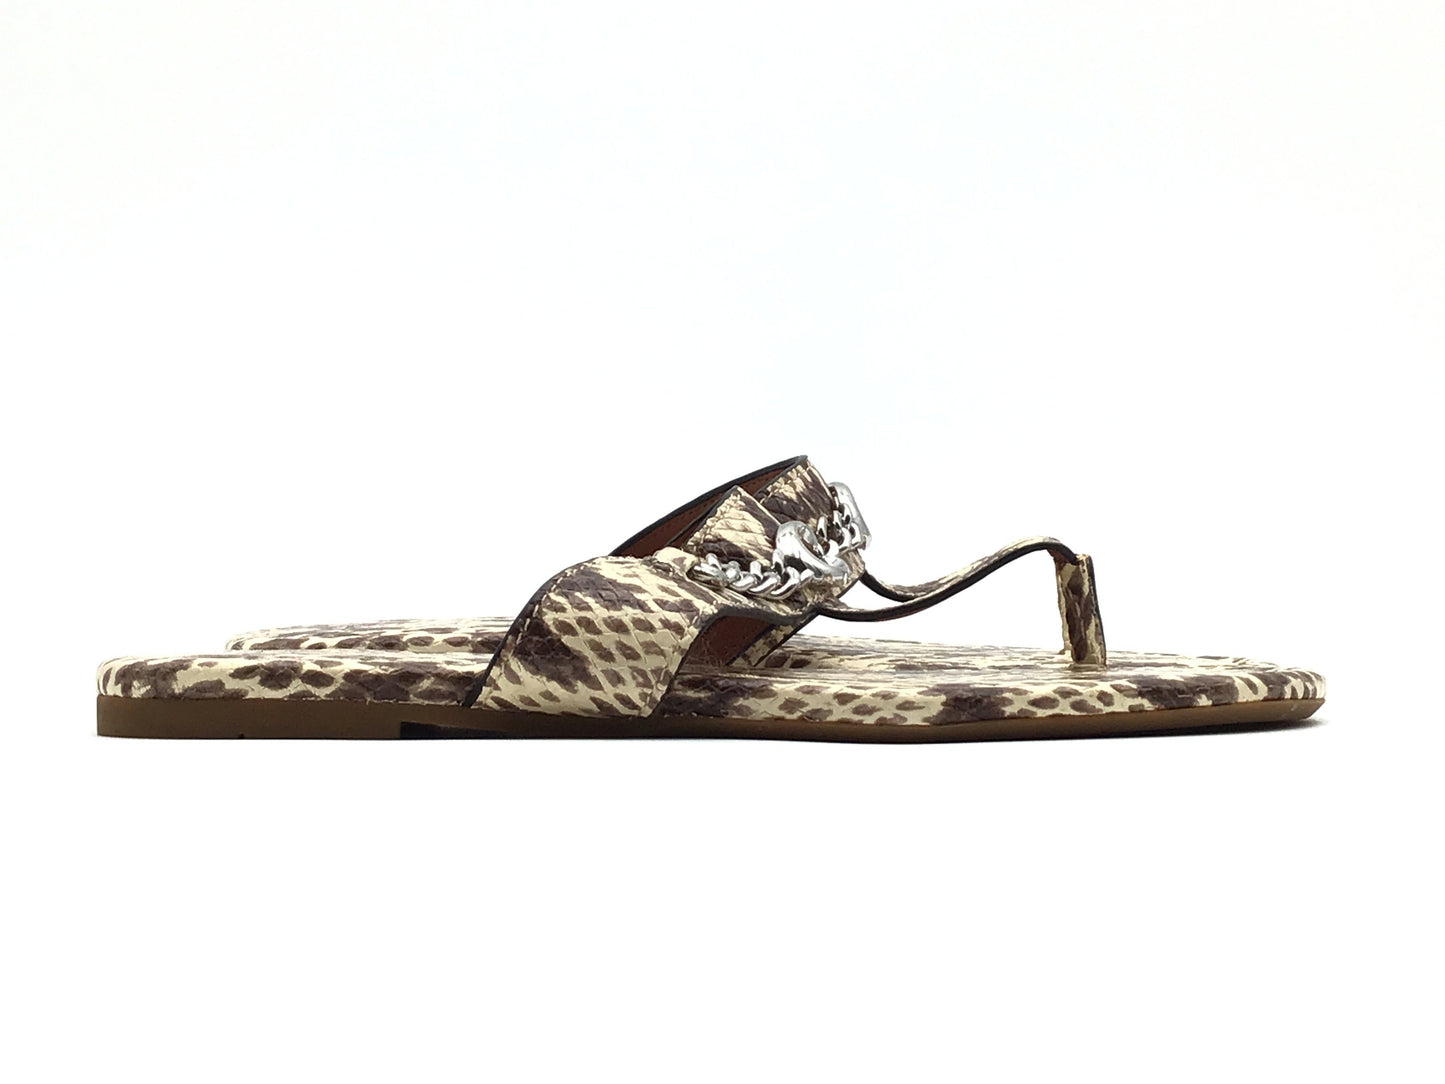 Snakeskin Print Sandals Designer Coach, Size 7.5